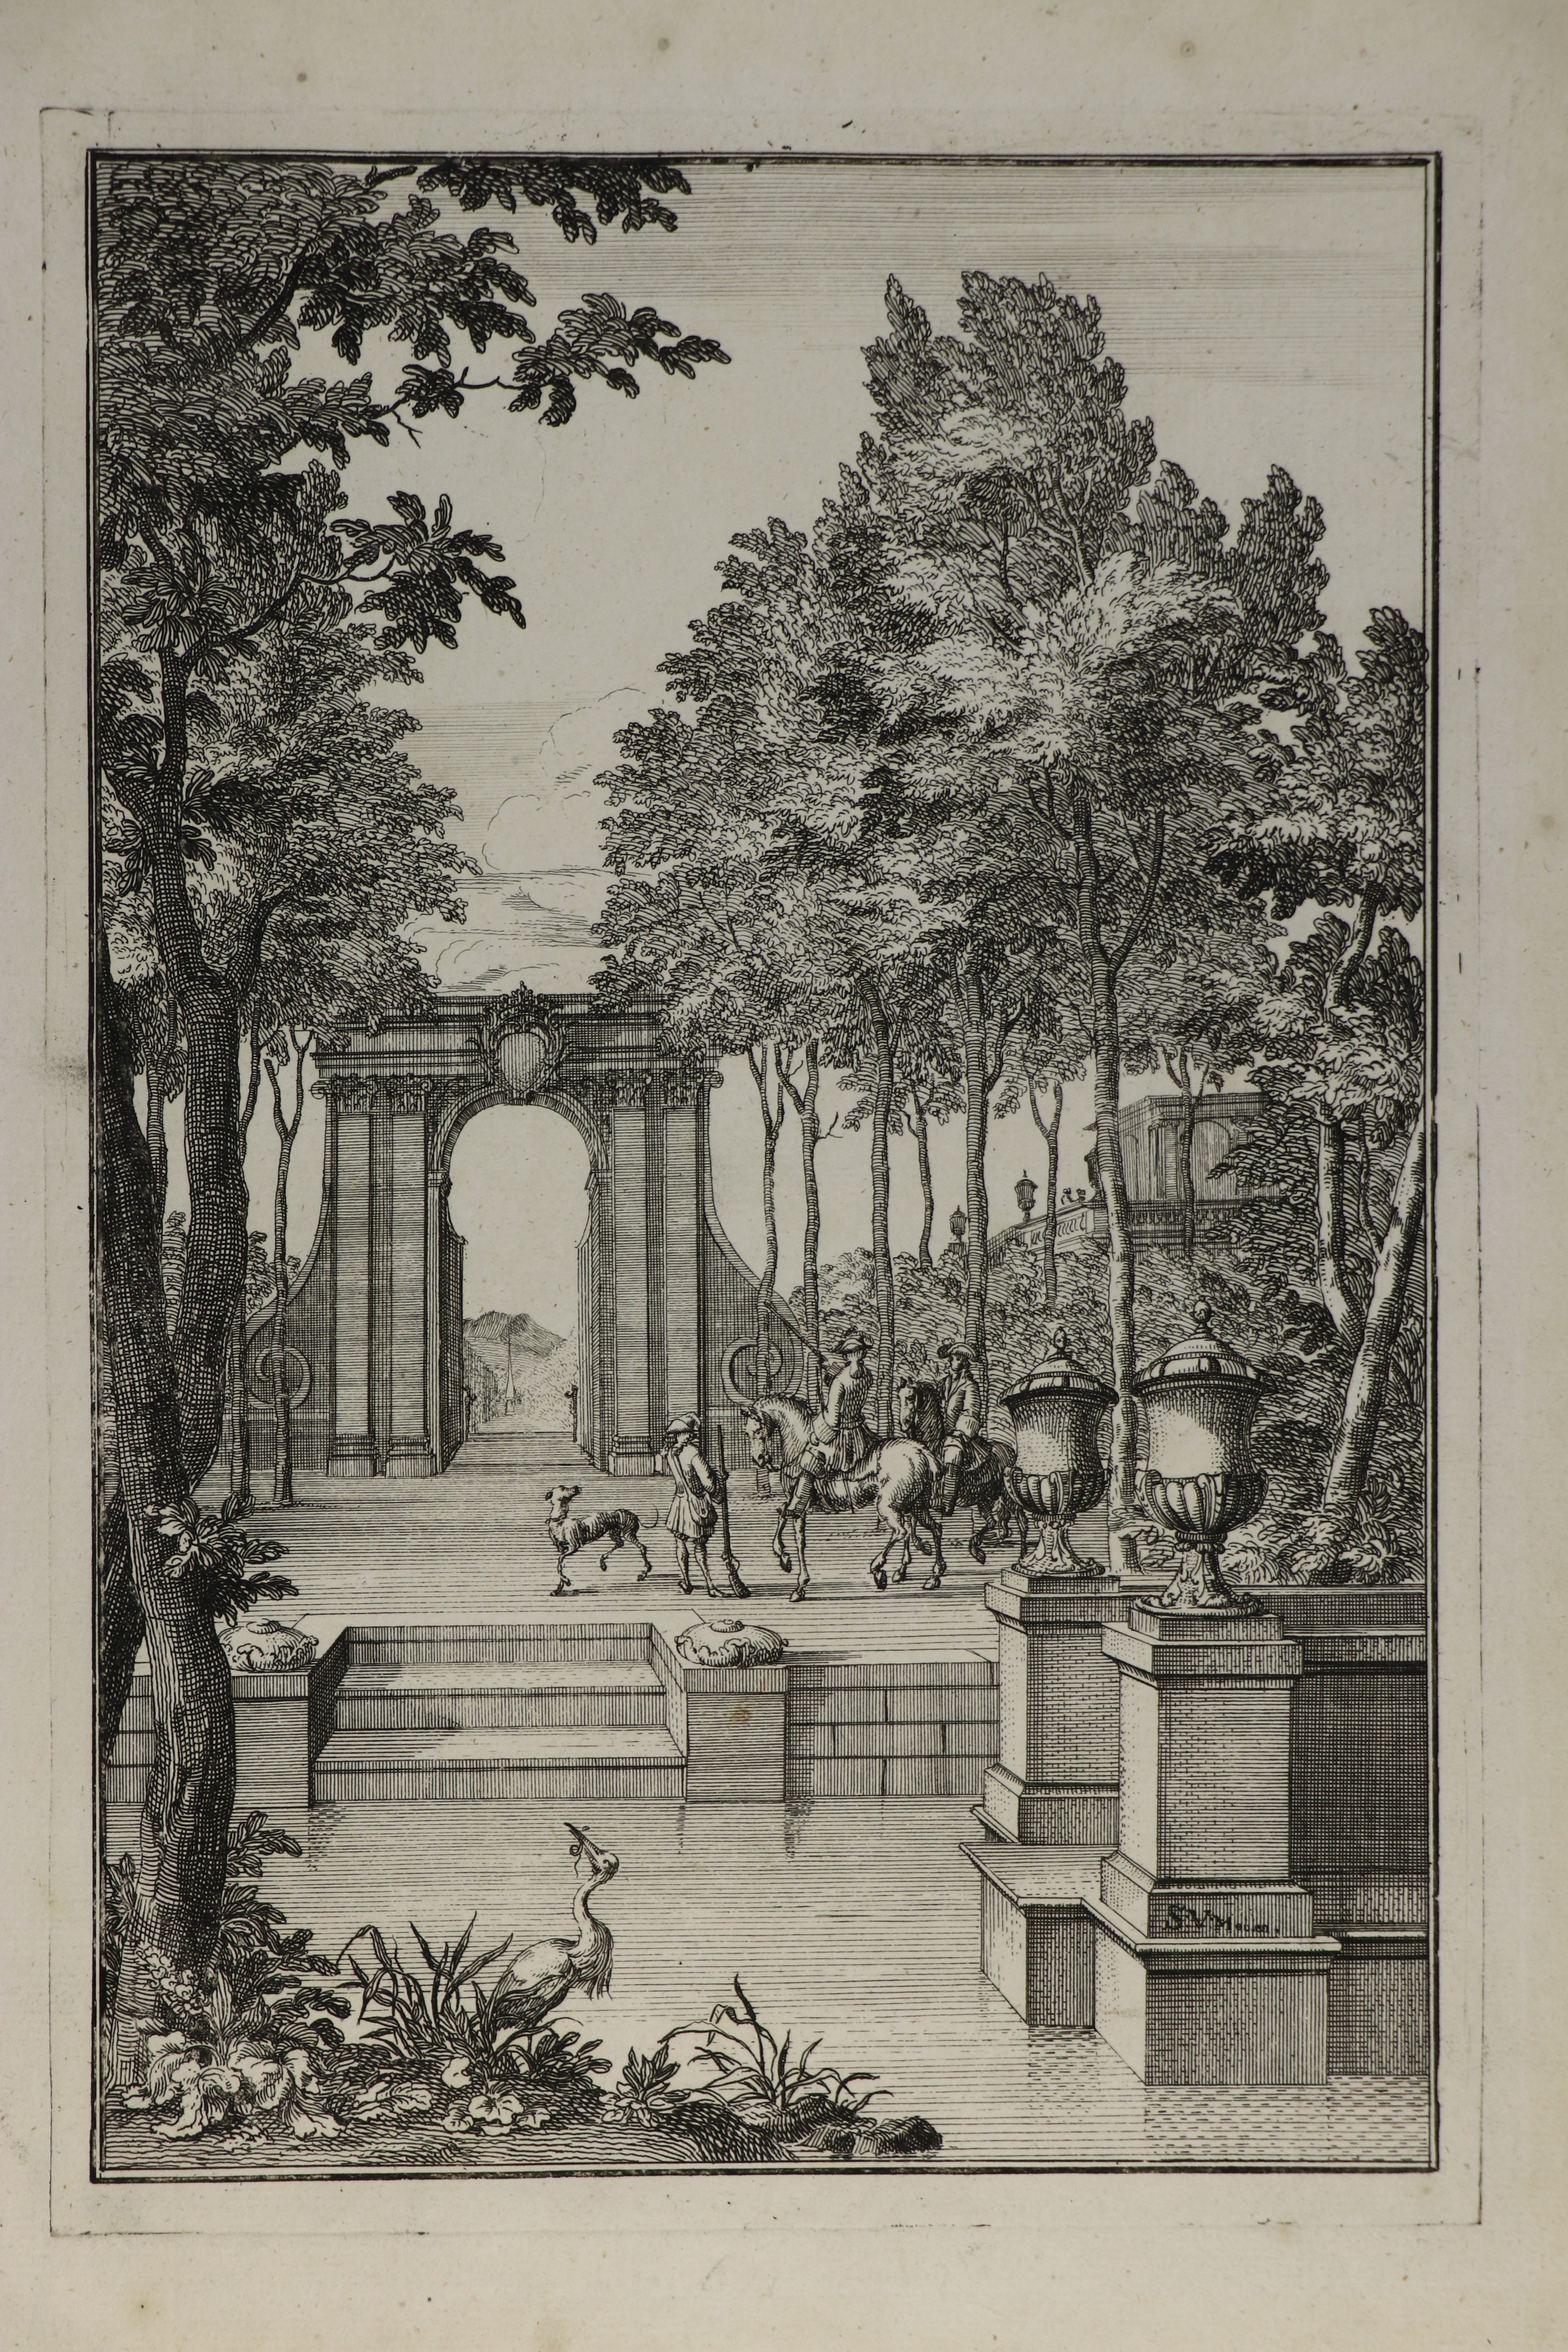 Ausritt zur Jagd, van der Meulen, 1707 (Städtisches Museum Schloss Rheydt CC BY)